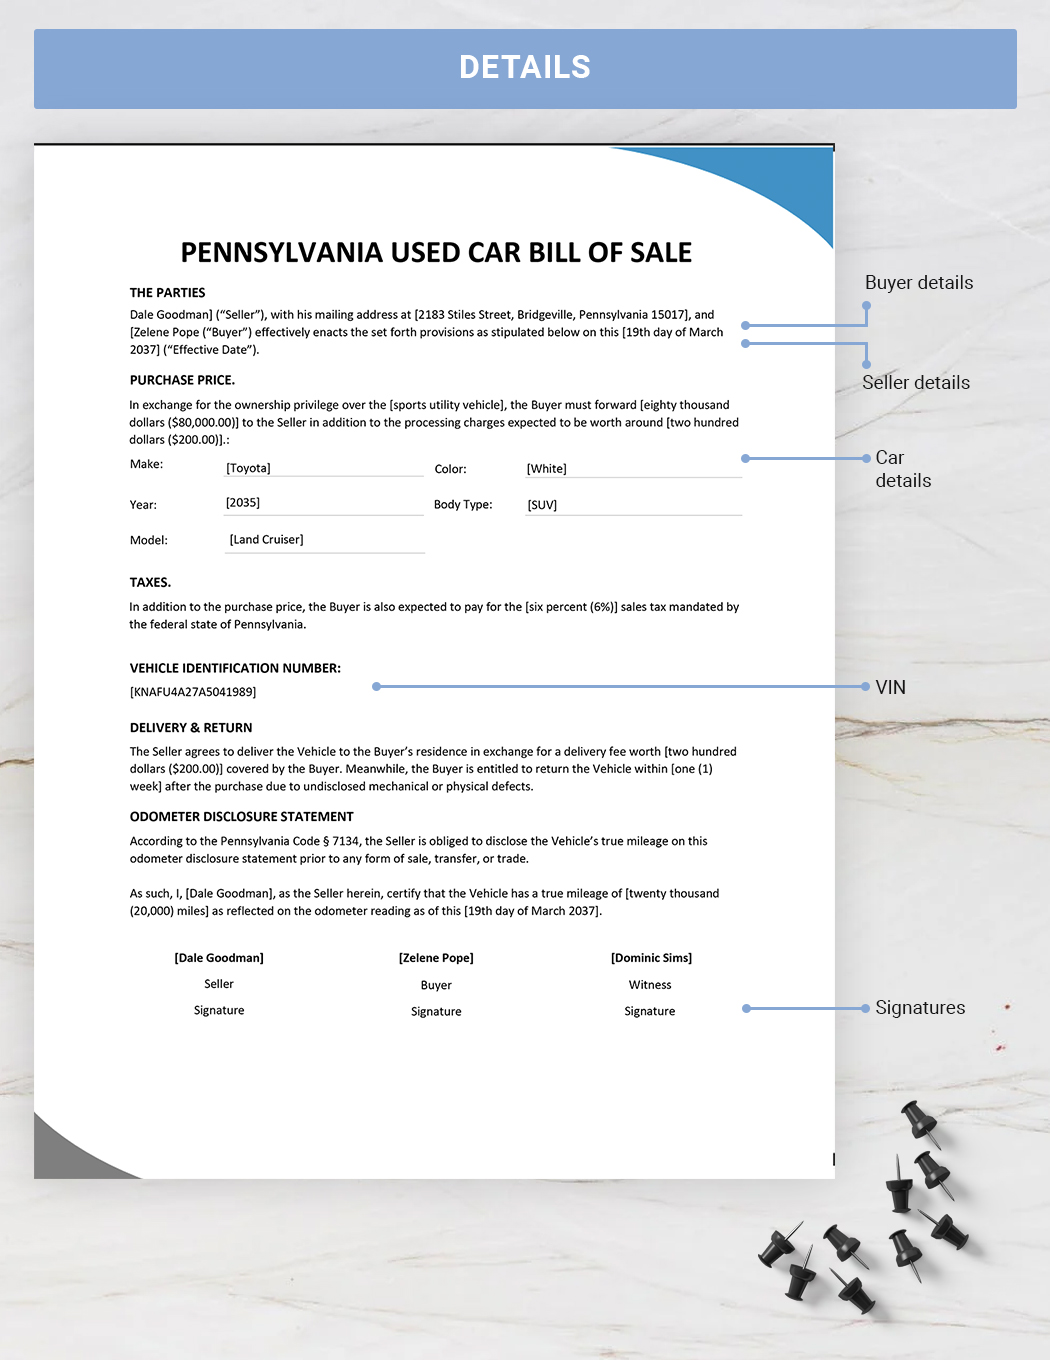 Pennsylvania Used Car Bill of Sale Template